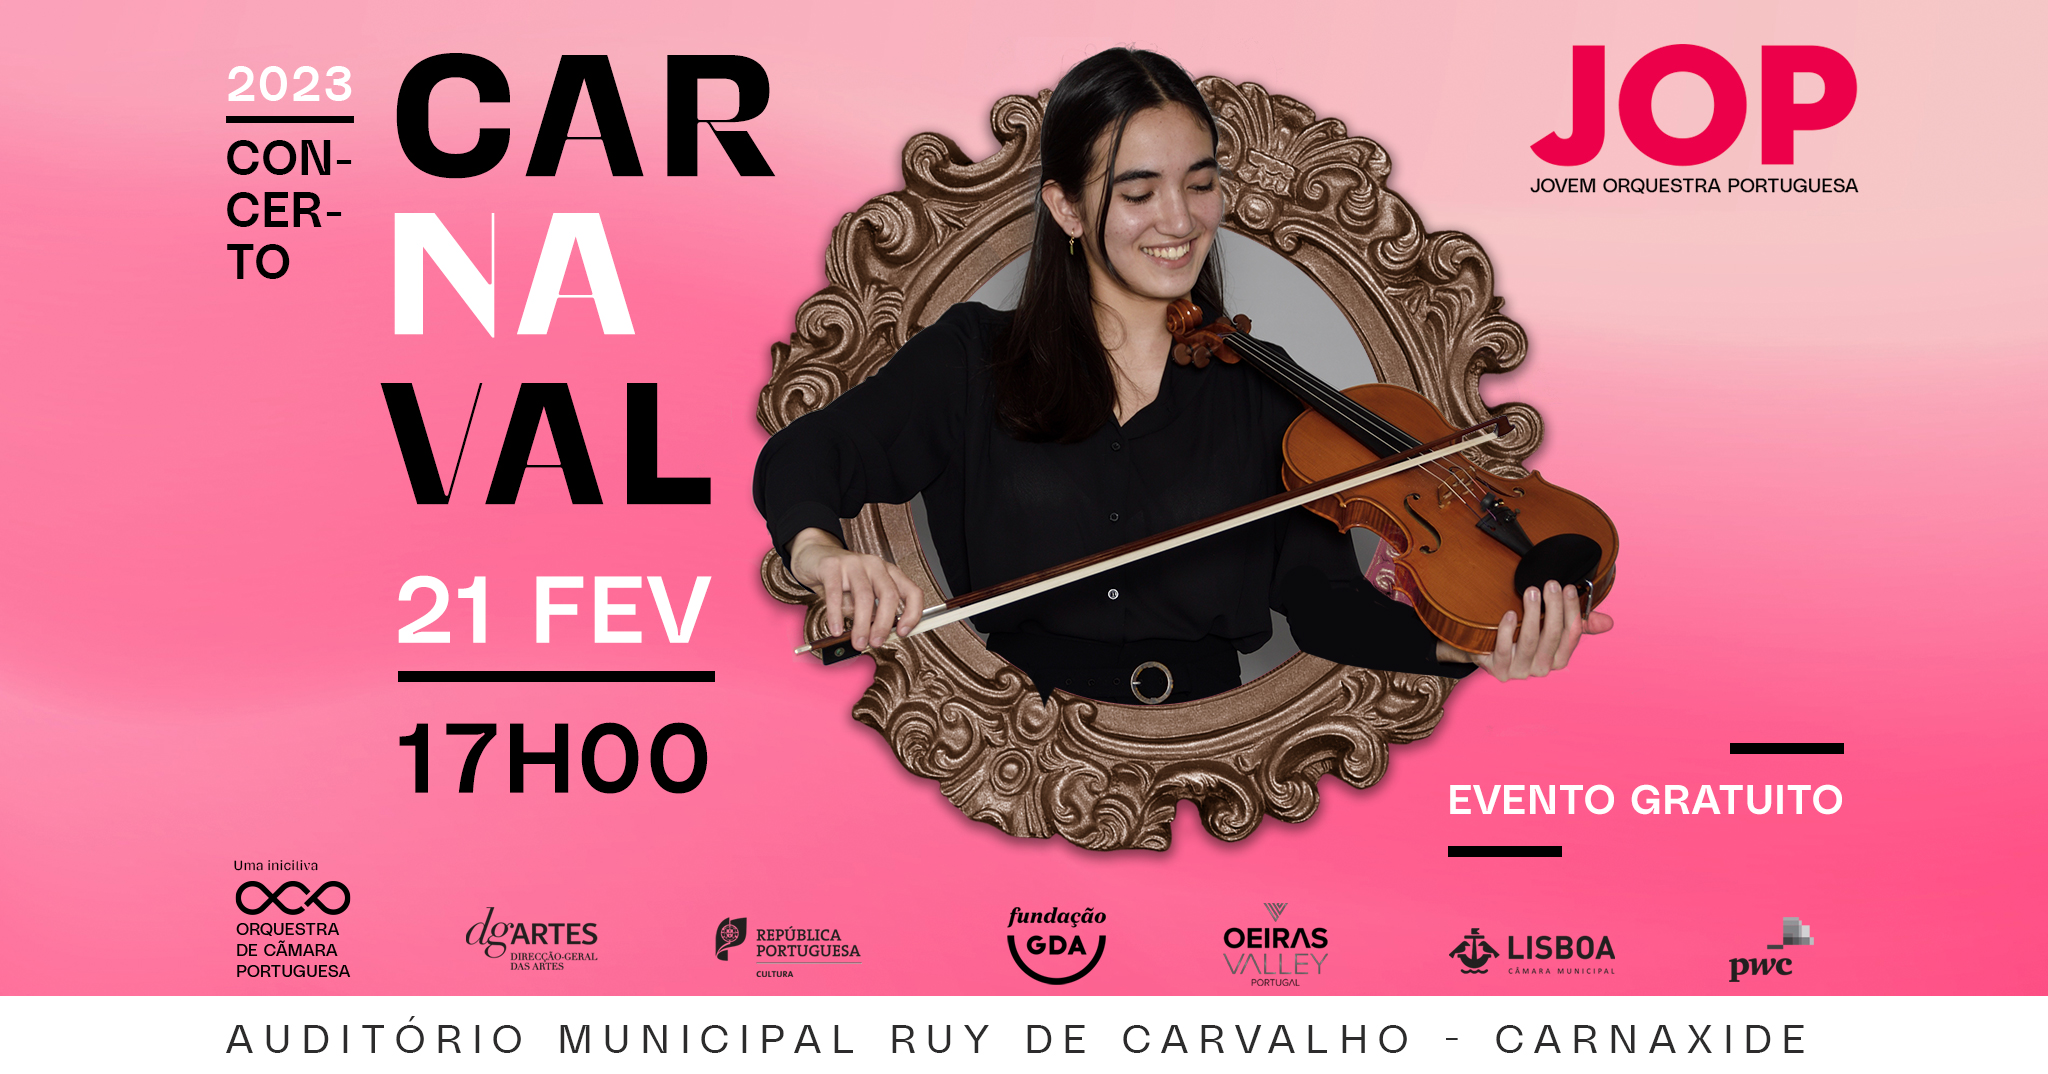 Concerto Carnaval JOP - Auditório Ruy de Carvalho